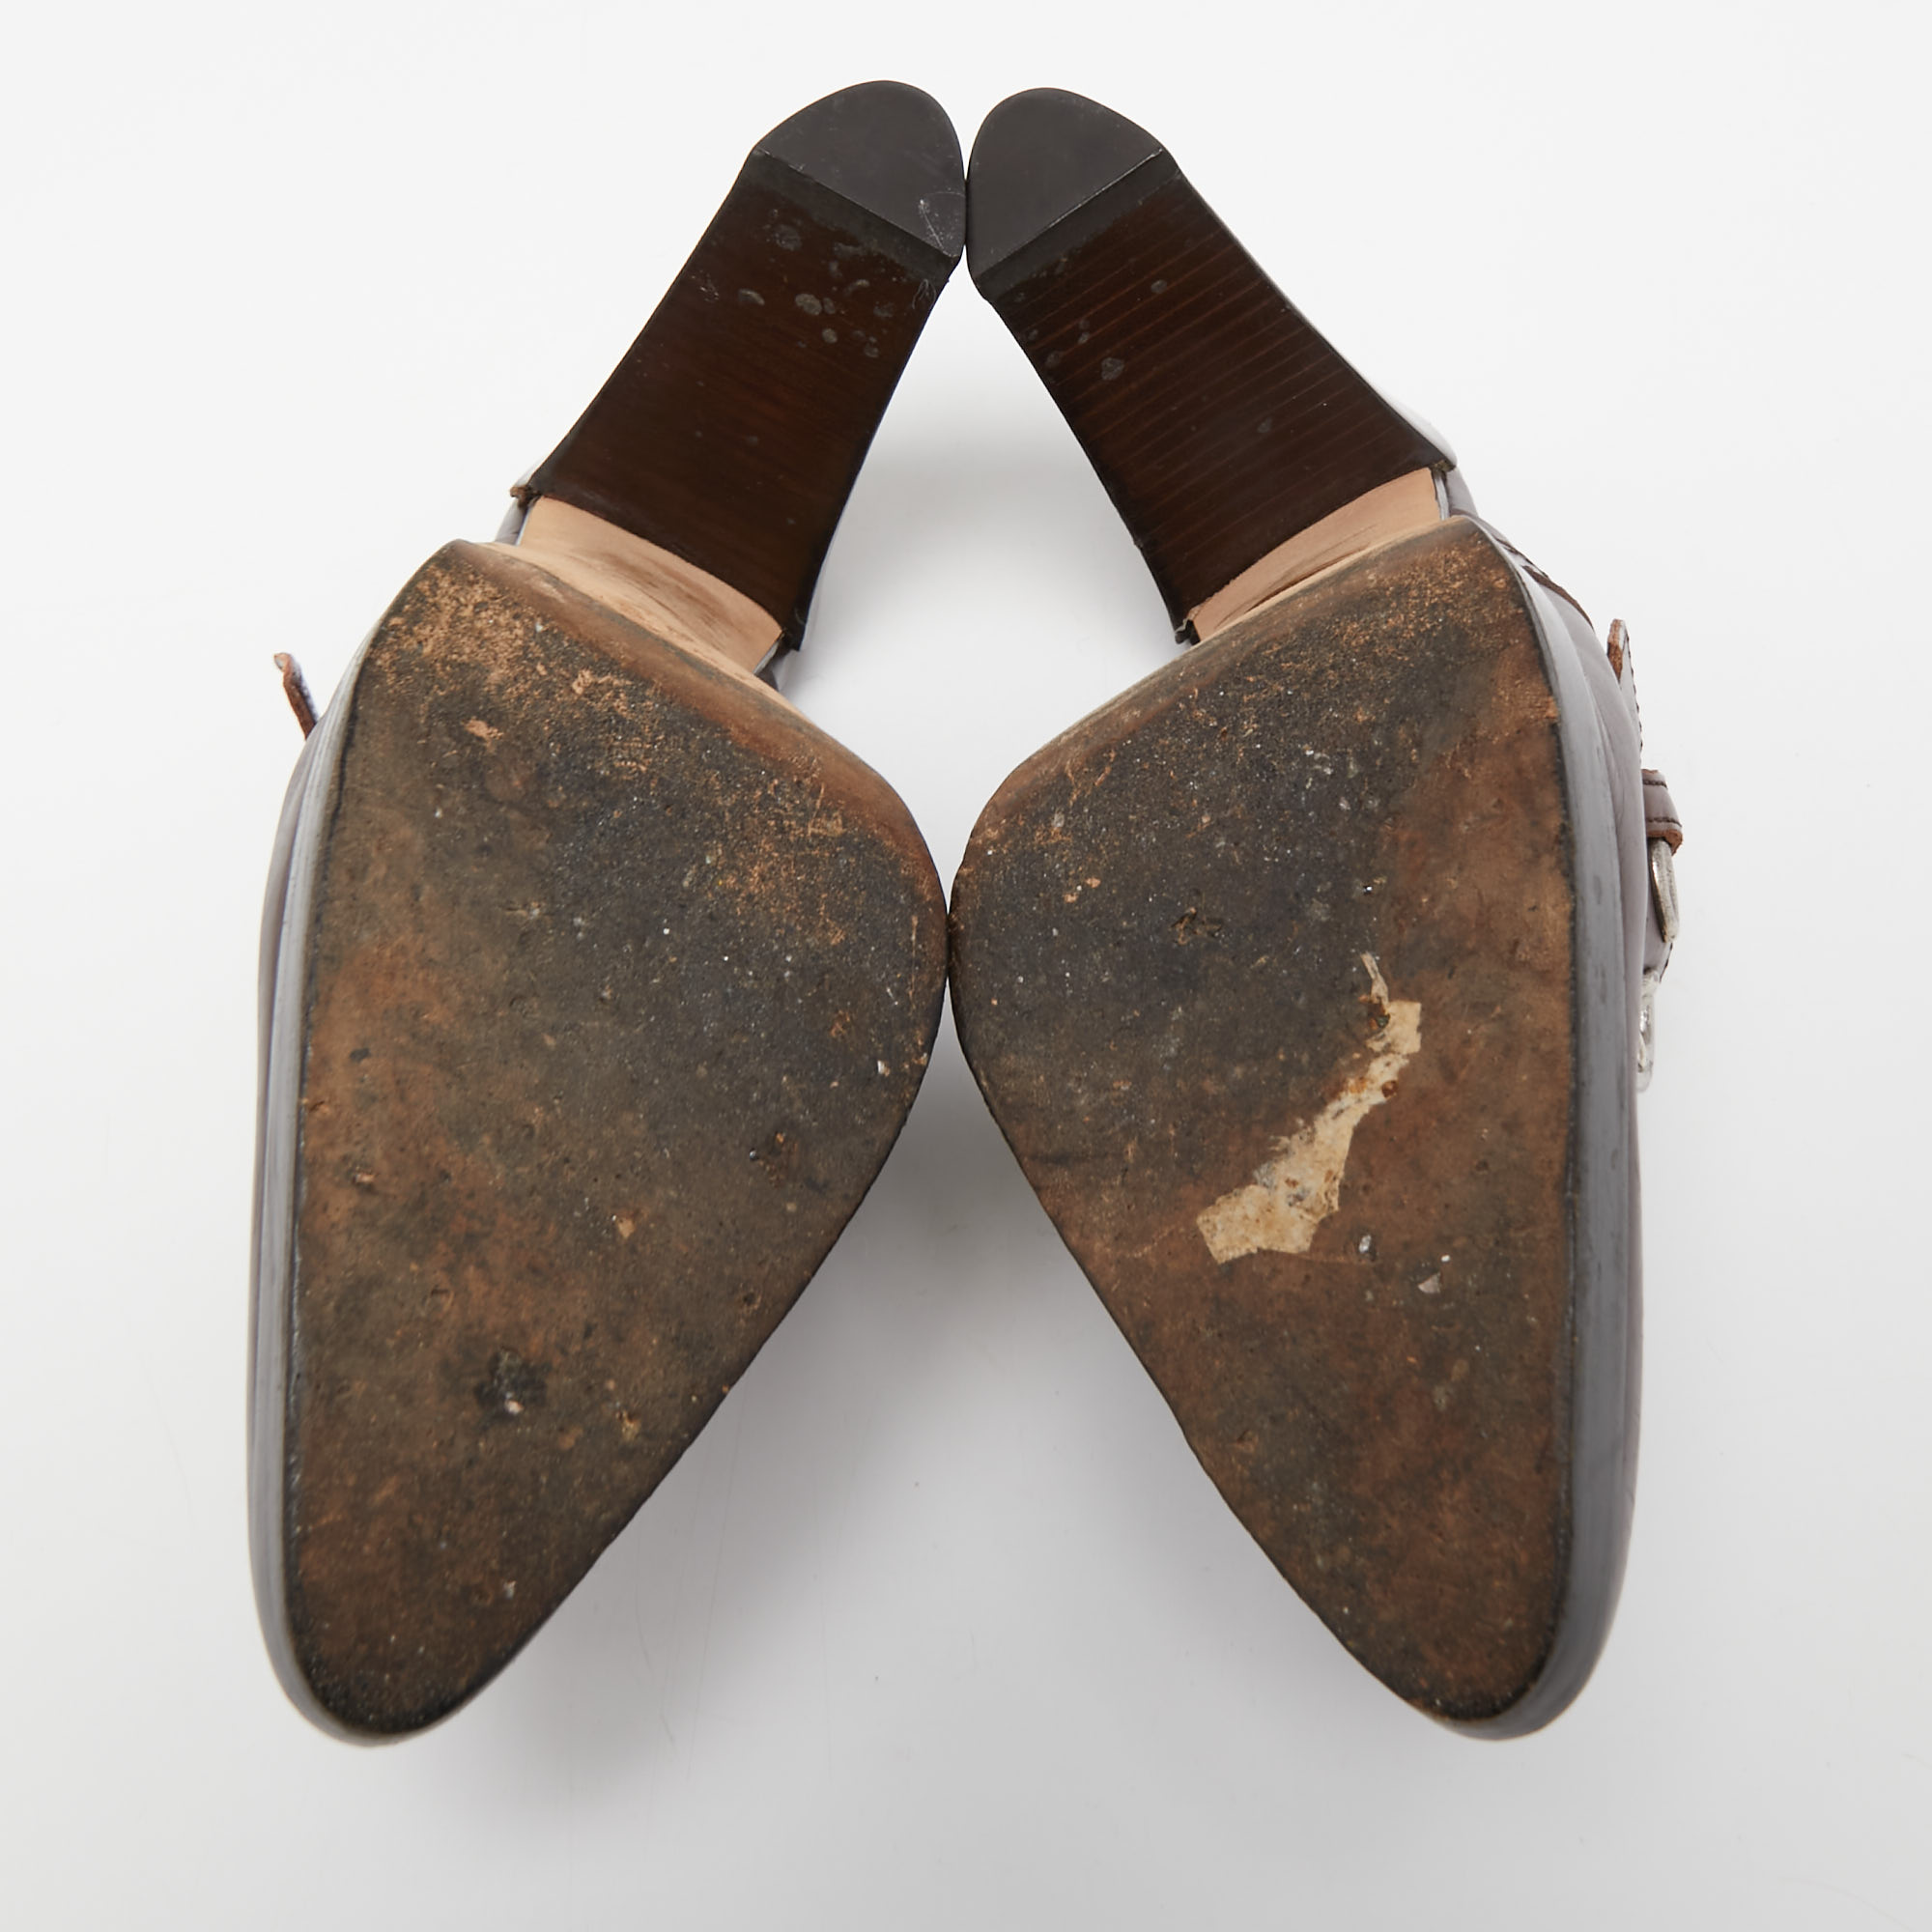 Yves Saint Laurent Dark Brown Leather Buckle Platform Mules Size 36